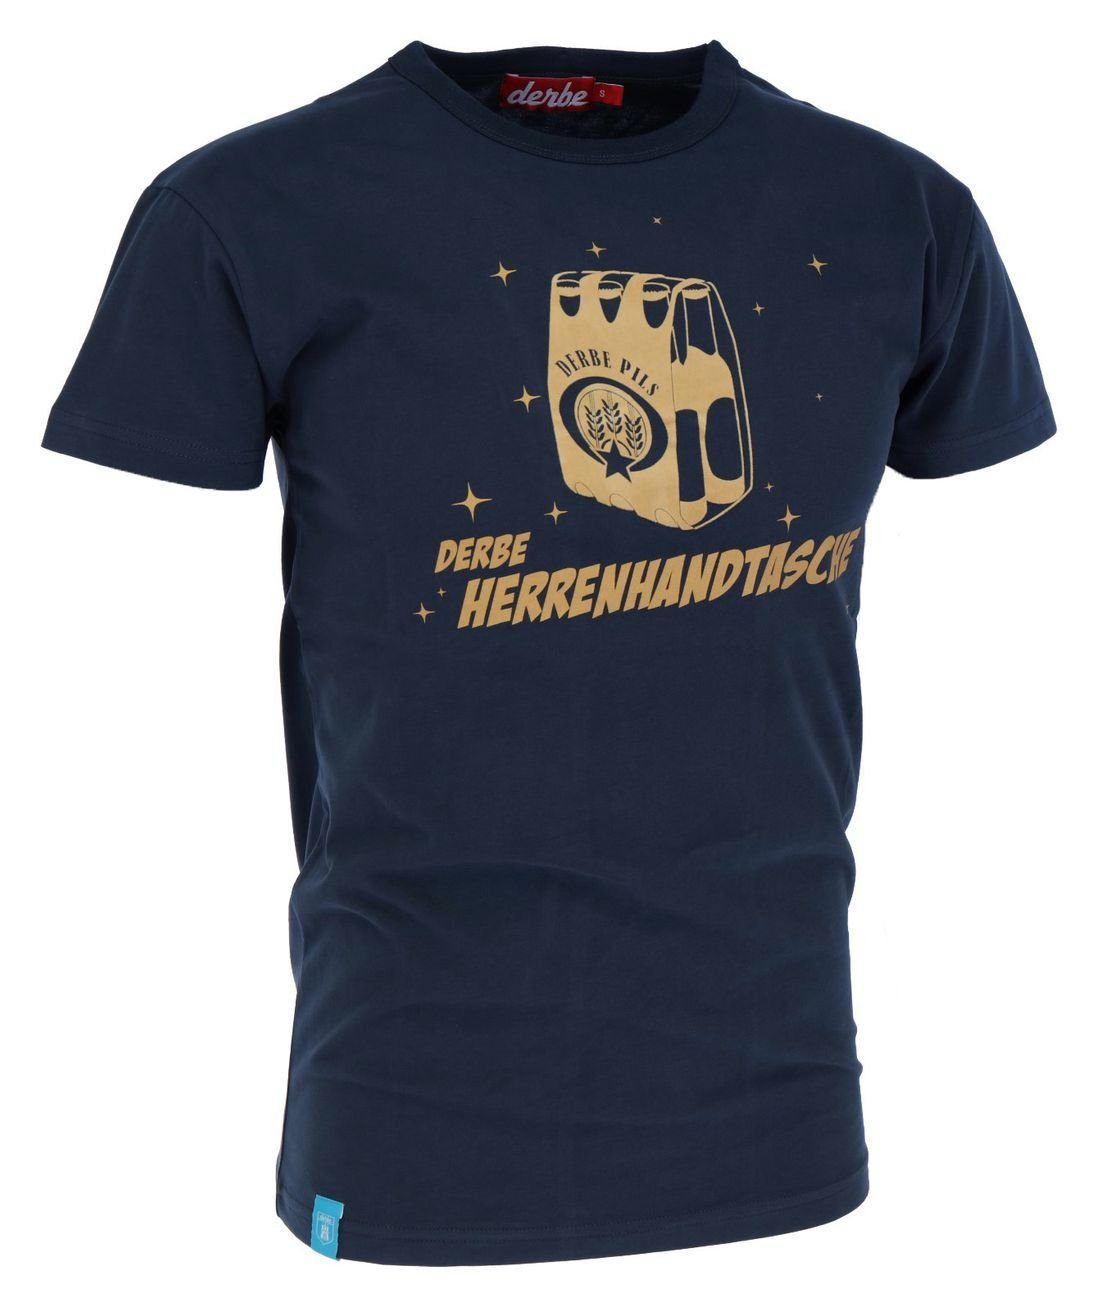 Herrenhandtasche Navy Derbe (1-tlg) T-Shirt